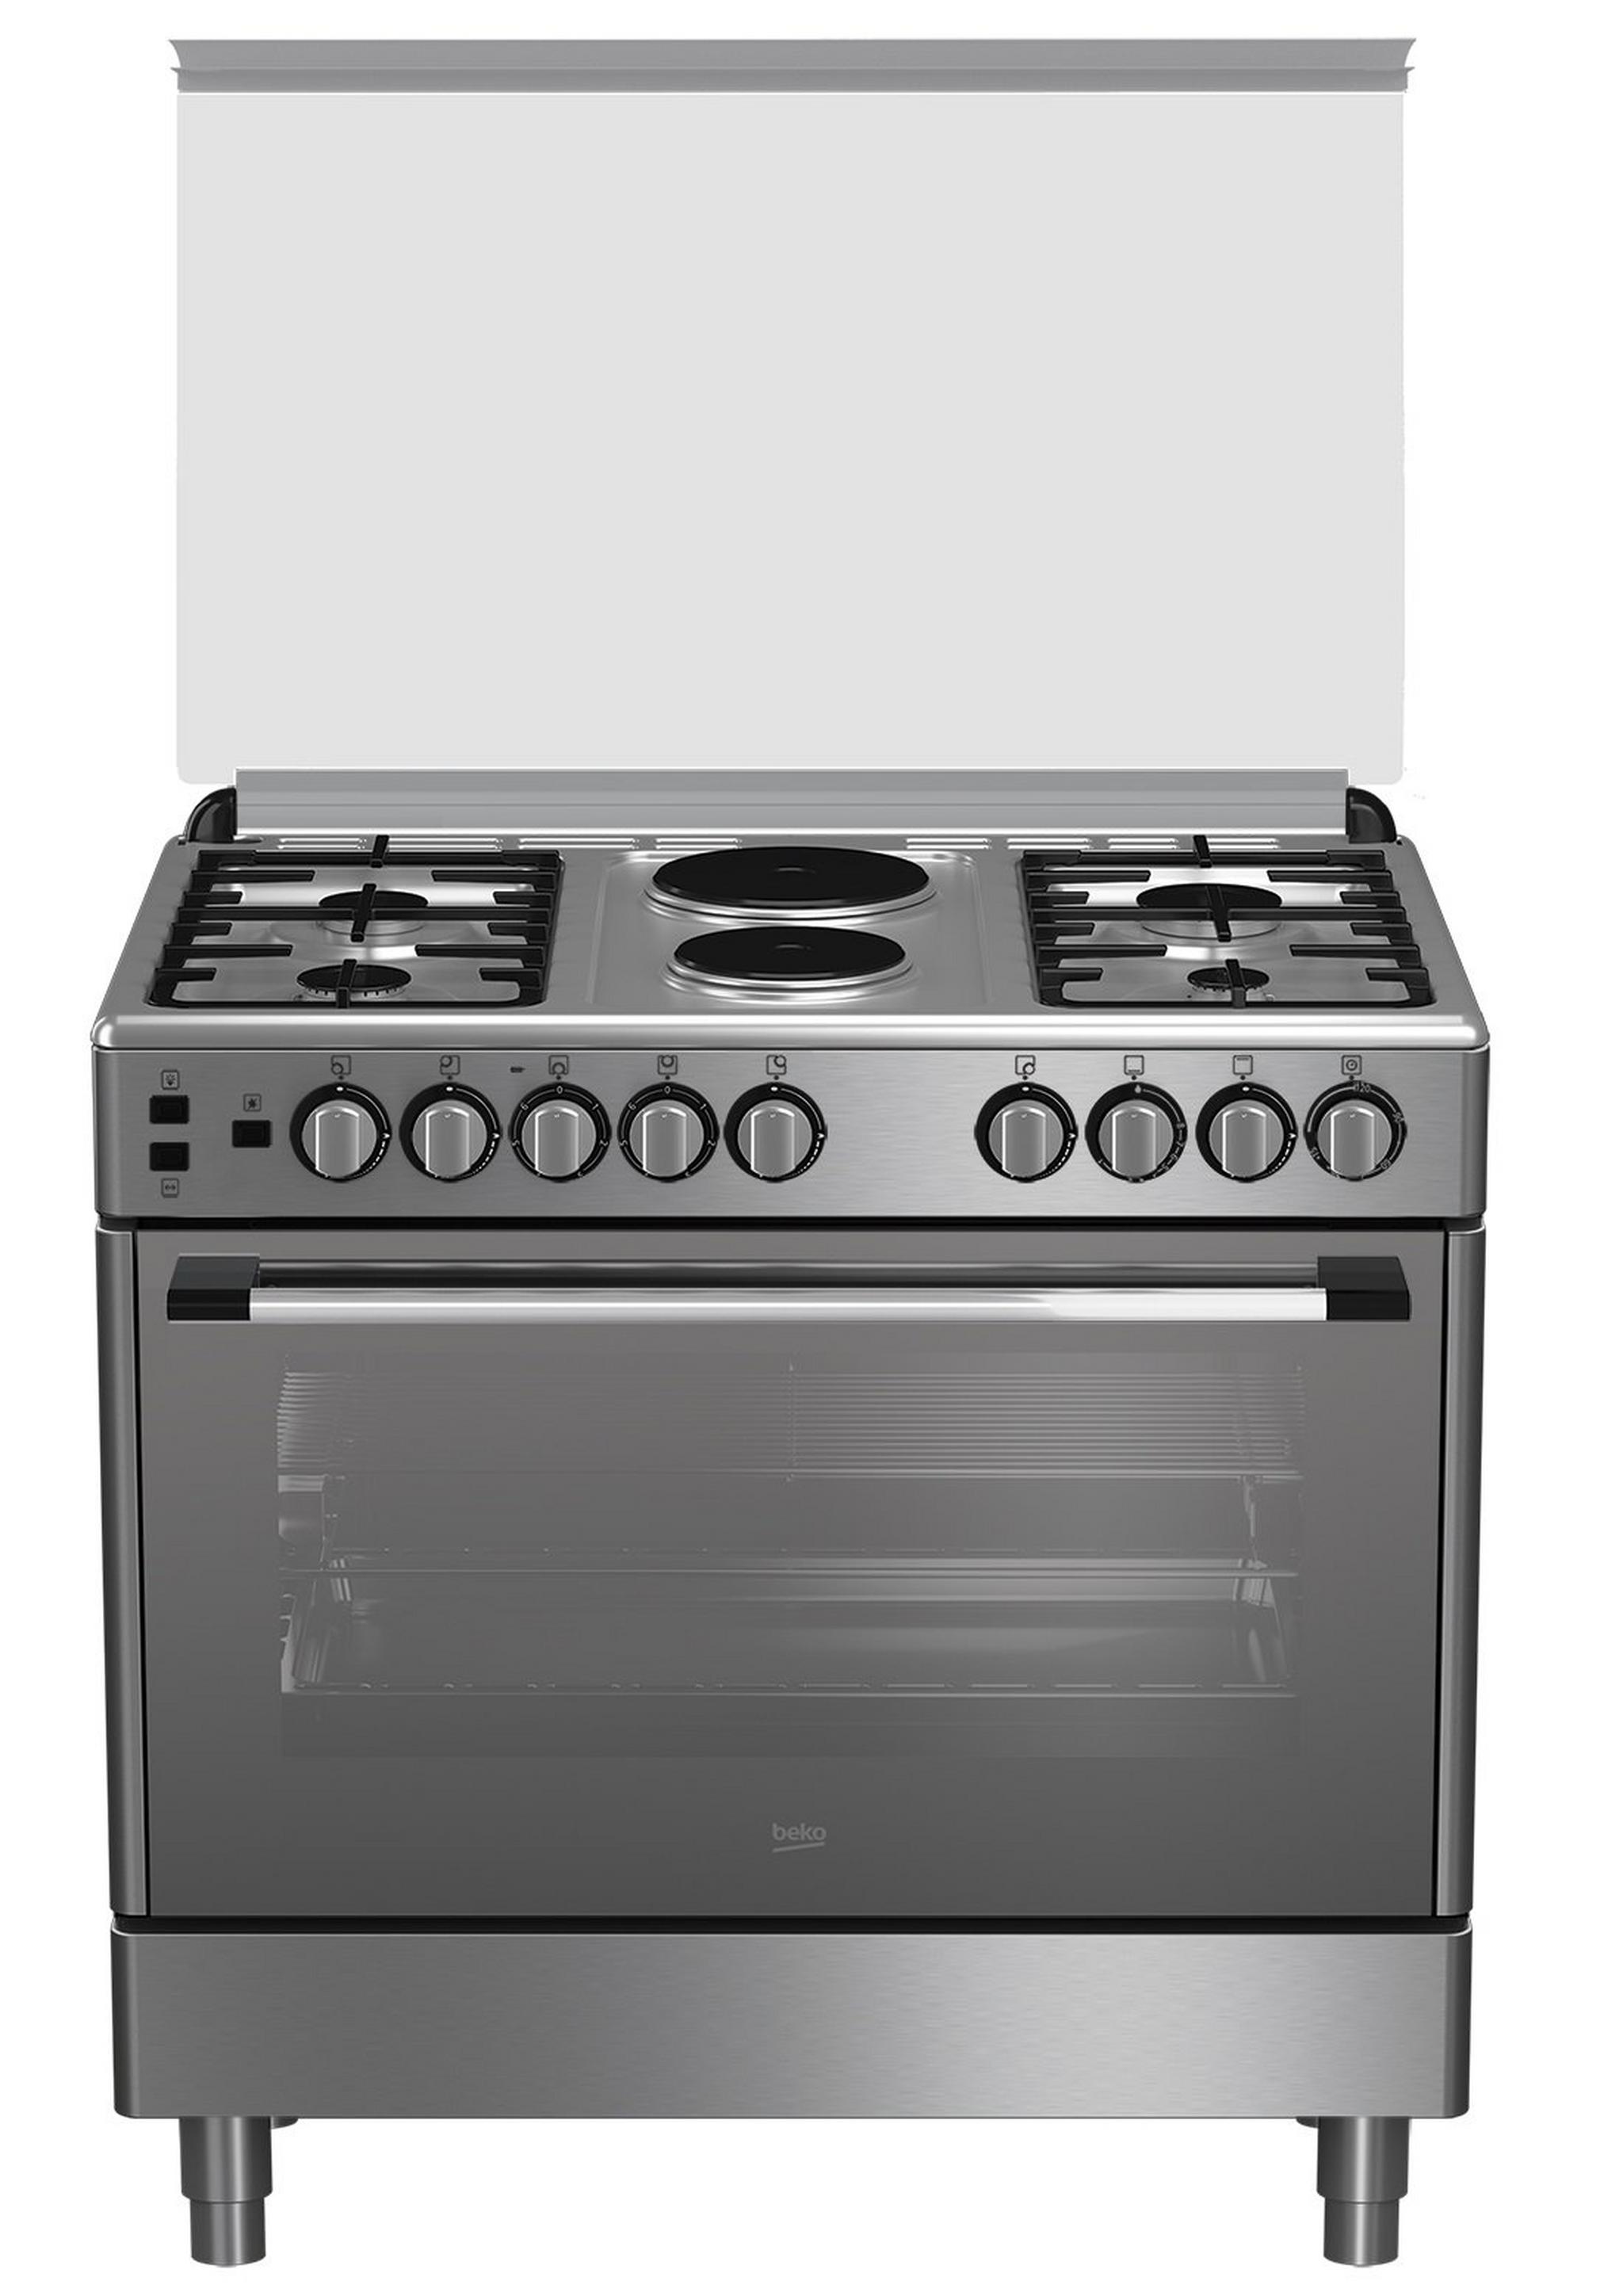 Beko 90X60cm Cooking range 2 Hotplate 4 Gas Burners (GG 12120 FX) - Stainless Steel